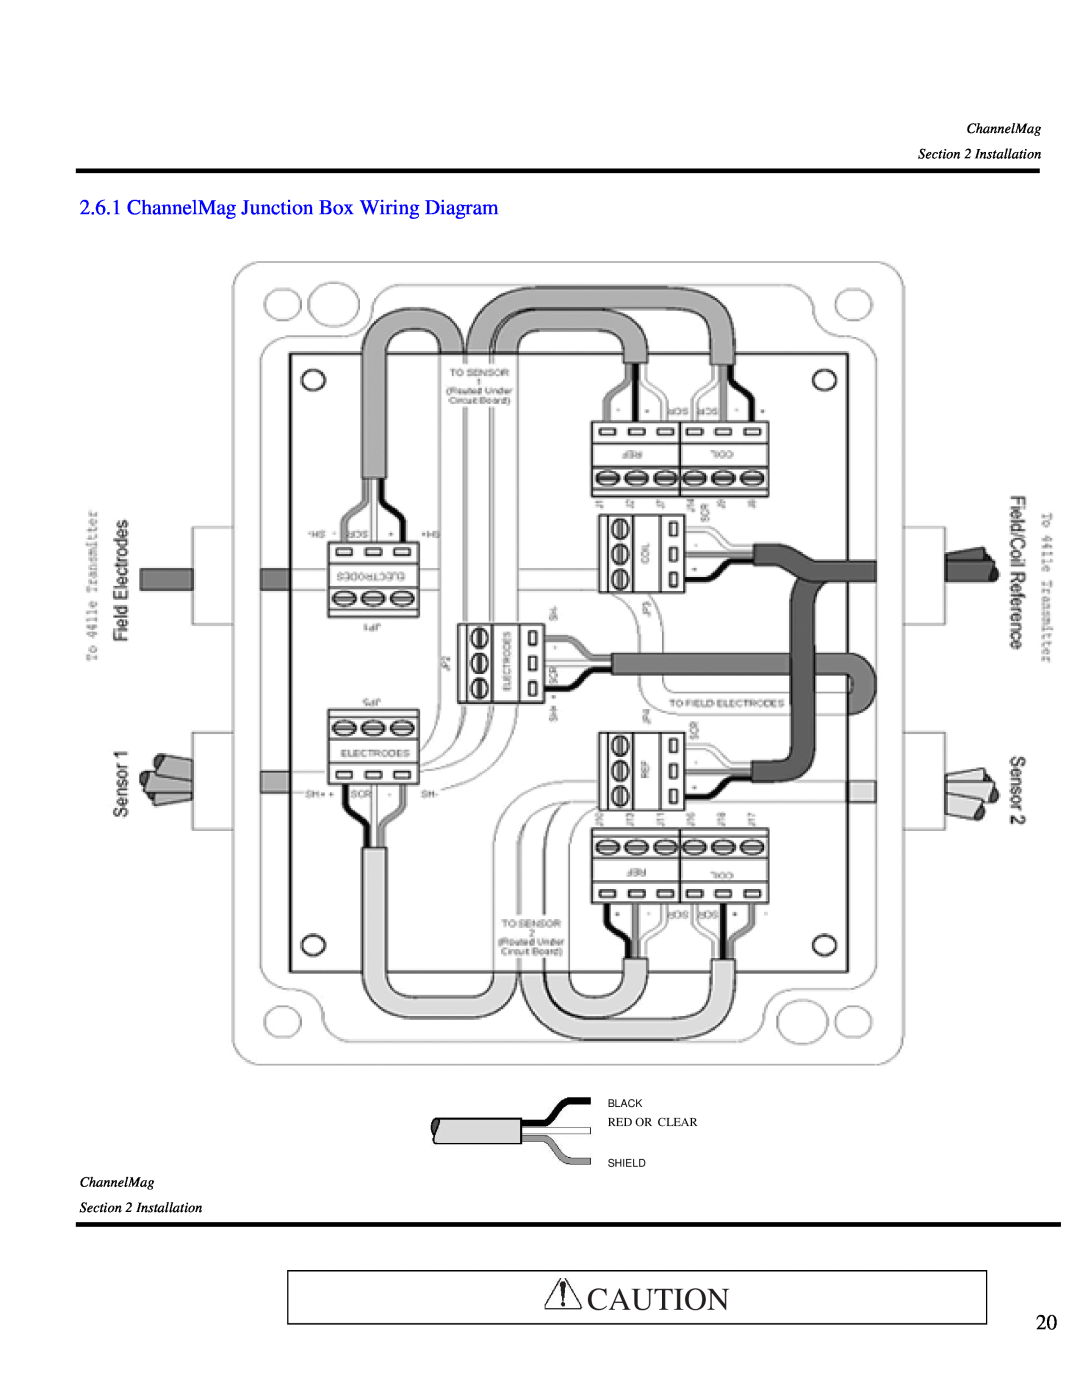 Arkon Channelmag ChannelMag Junction Box Wiring Diagram, ChannelMag Installation, Red Or Clear, Black, Shield 